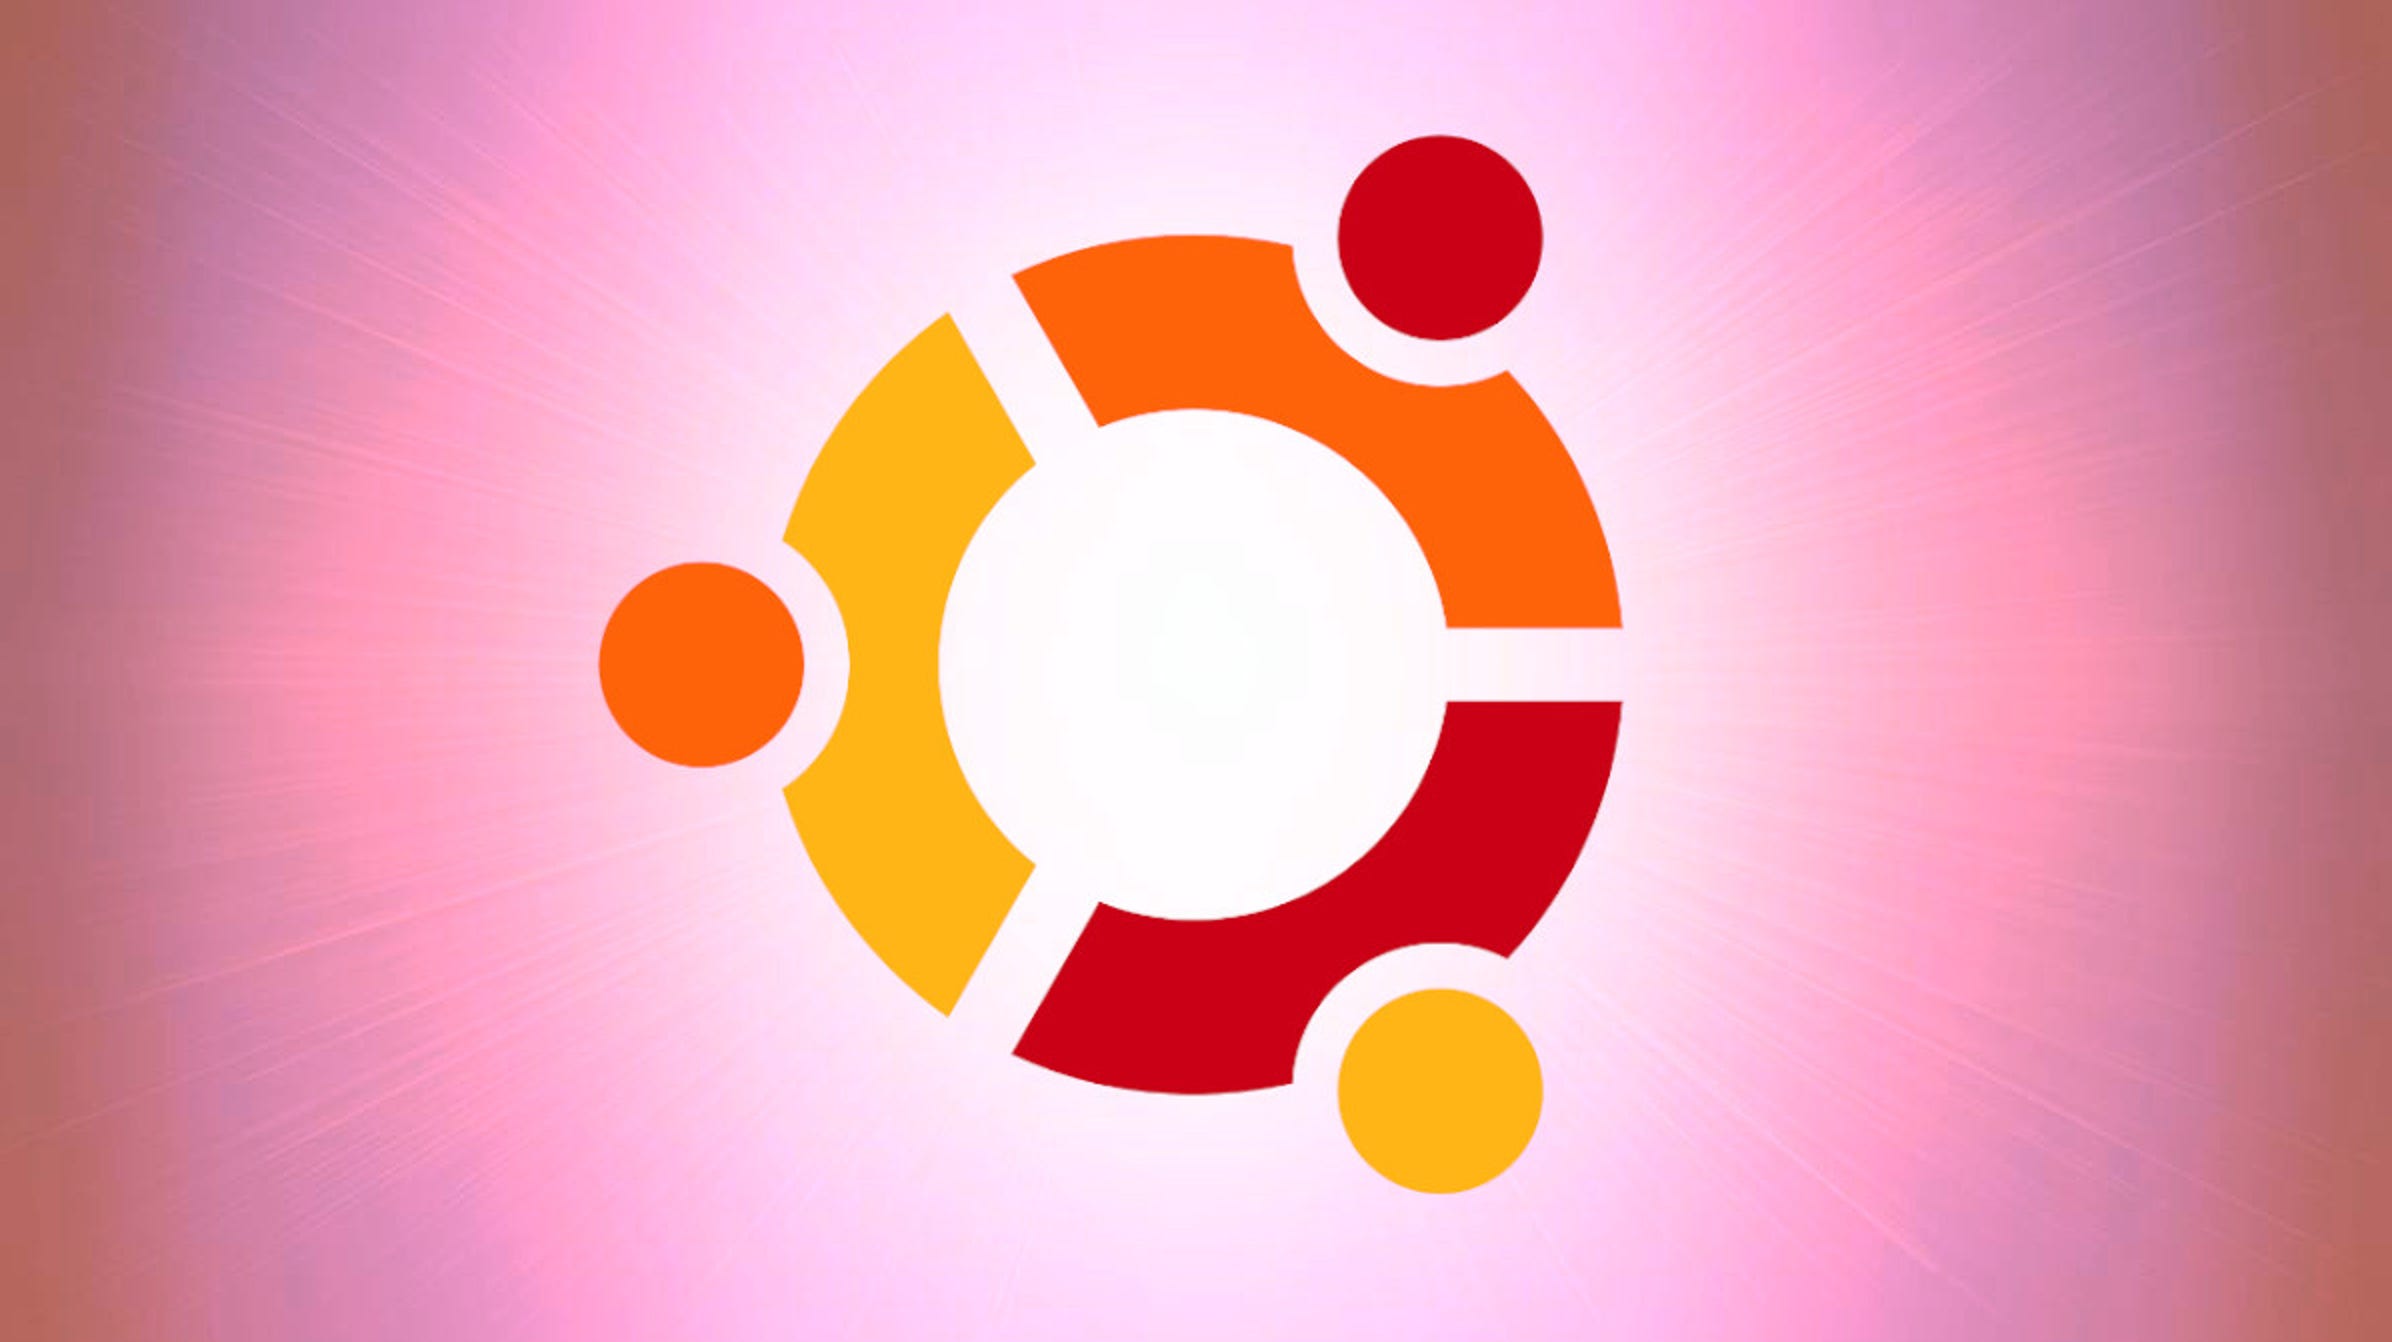 ubuntu-linux-icon-logo-hero-6046997-3896488-jpg-2203742